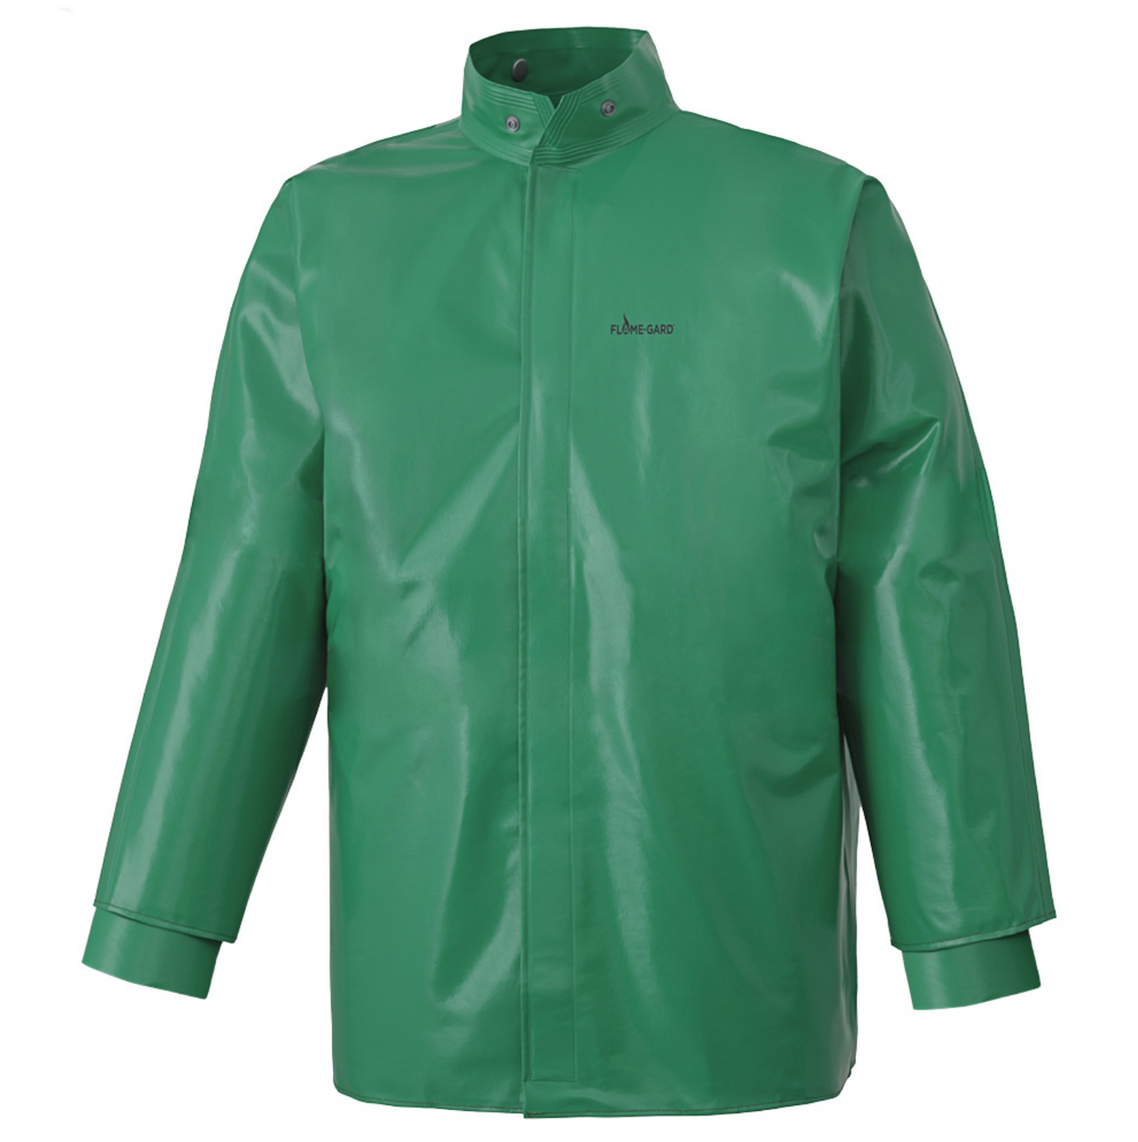 Ranpro J43 380 Flame/ Chemical/ Acid Resistant Jacket | Safetywear.ca